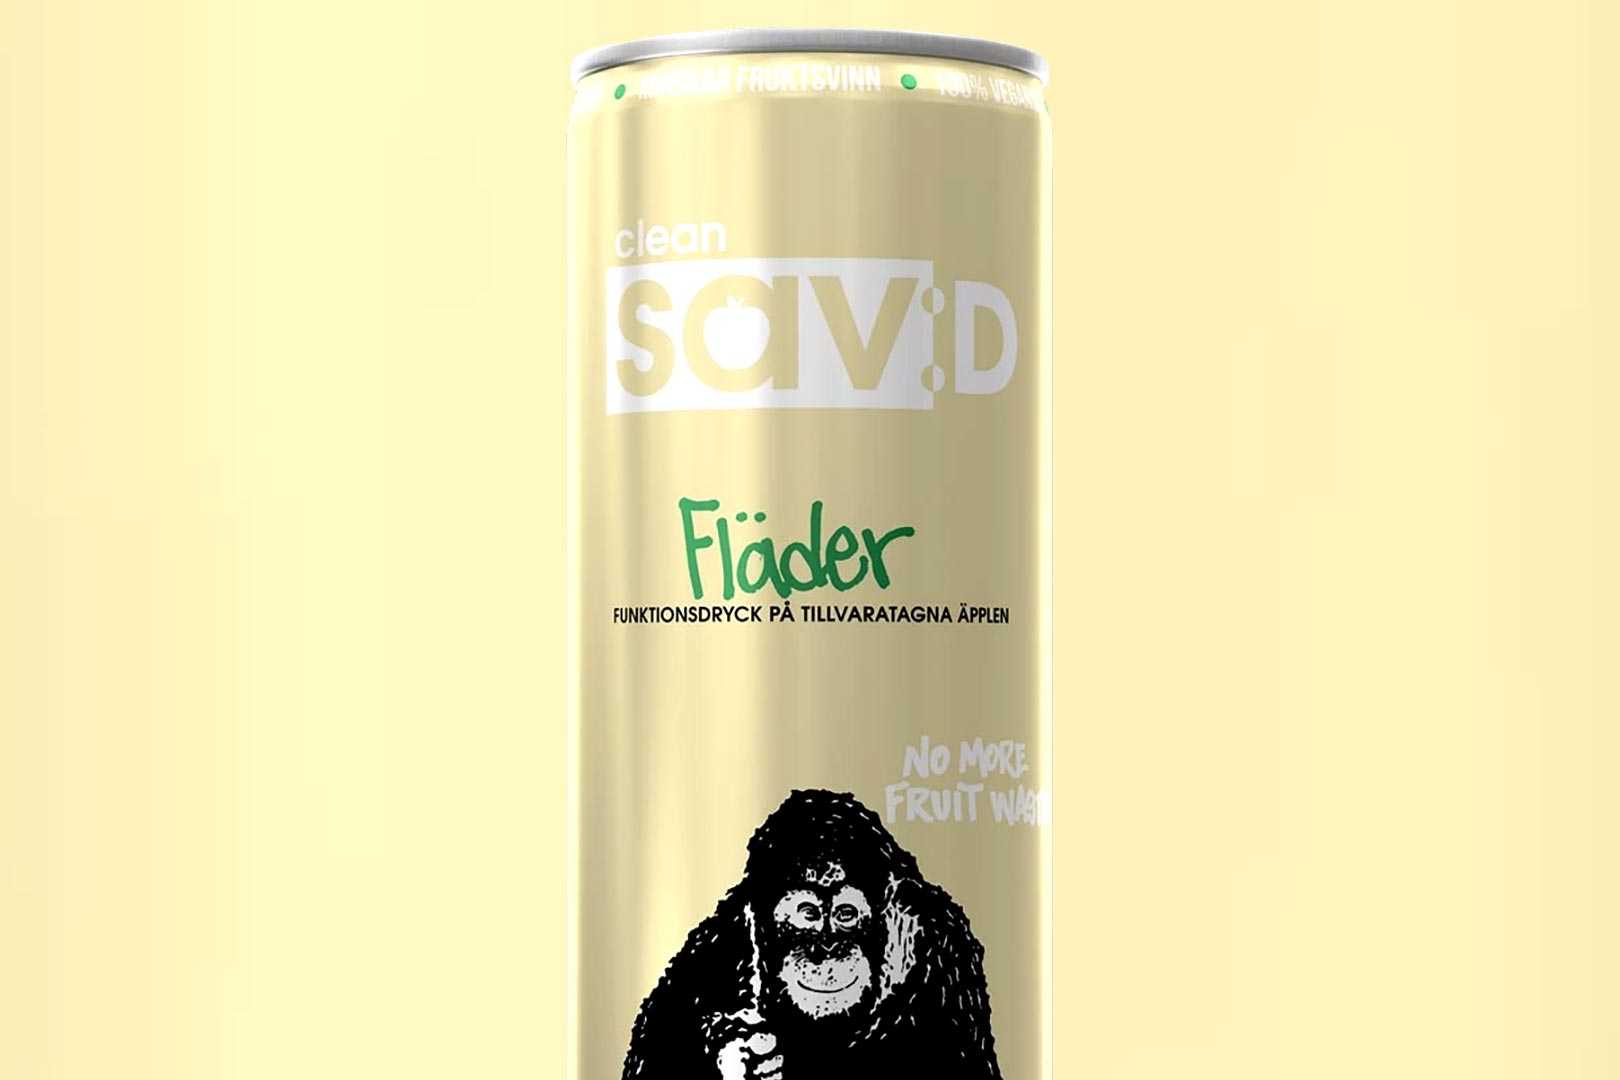 Elderflower Clean Savd